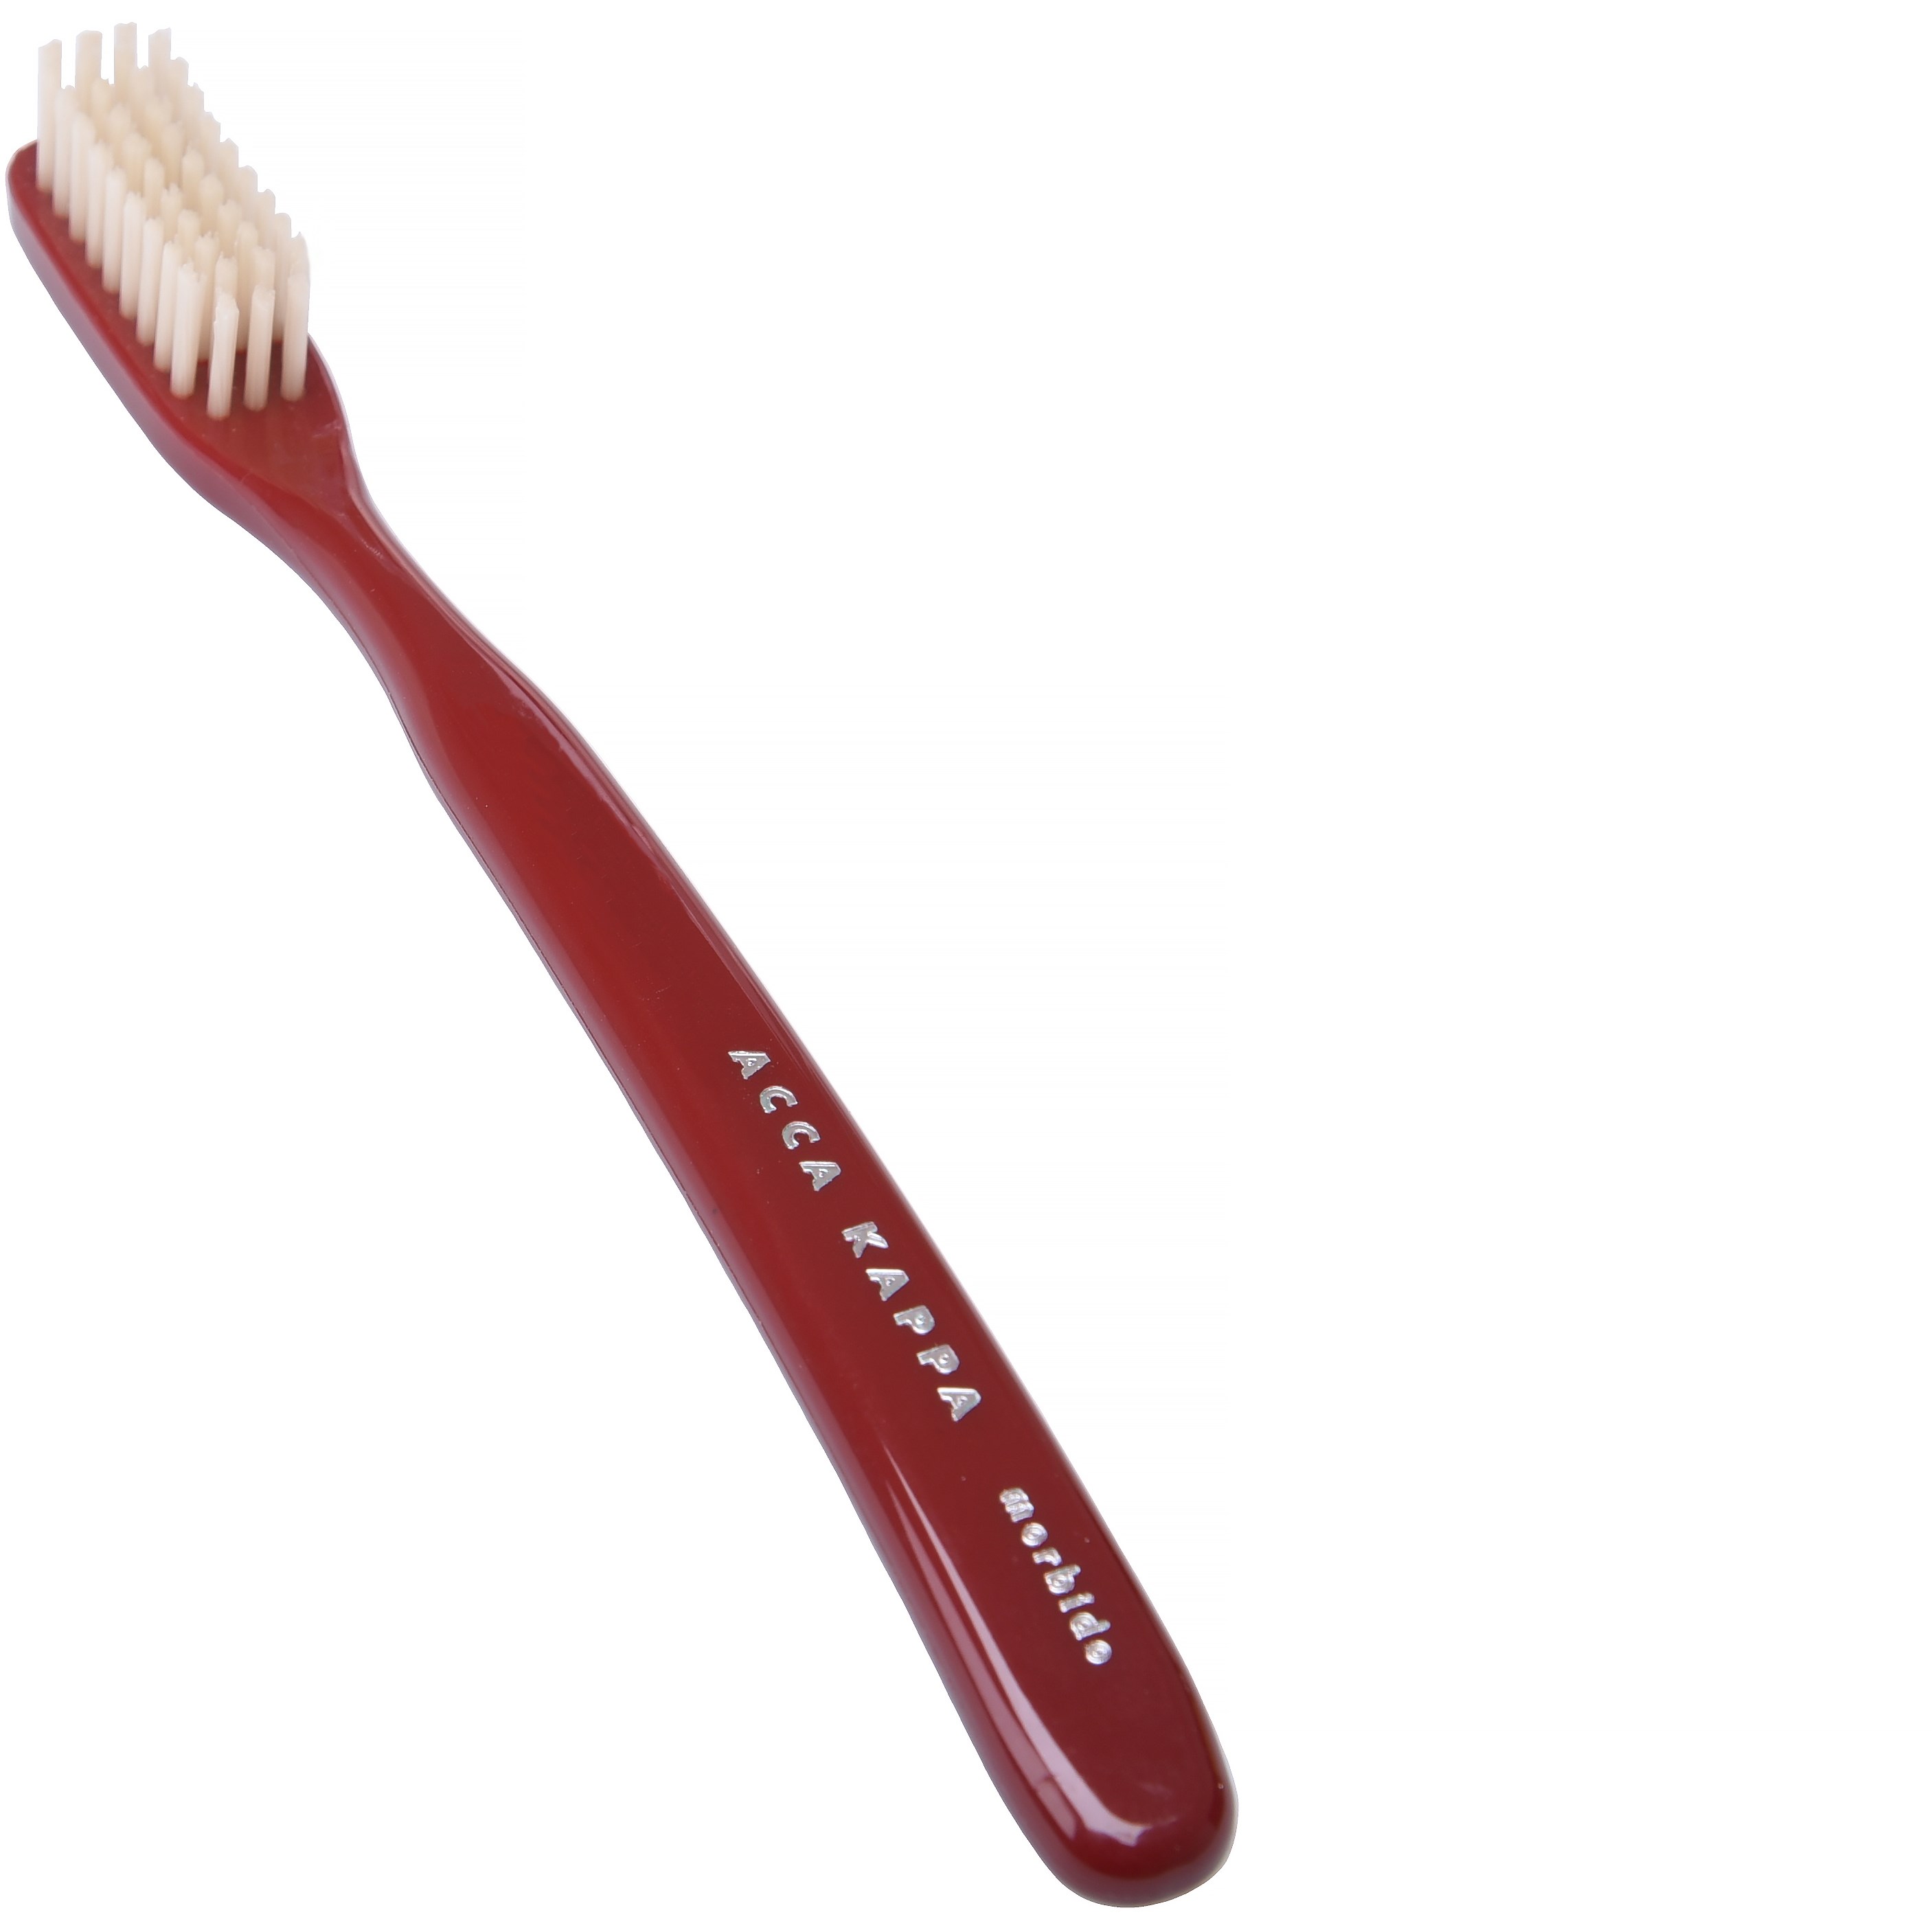 Bilde av Acca Kappa Tooth Brush Vintage Medium Natural Bristles Red